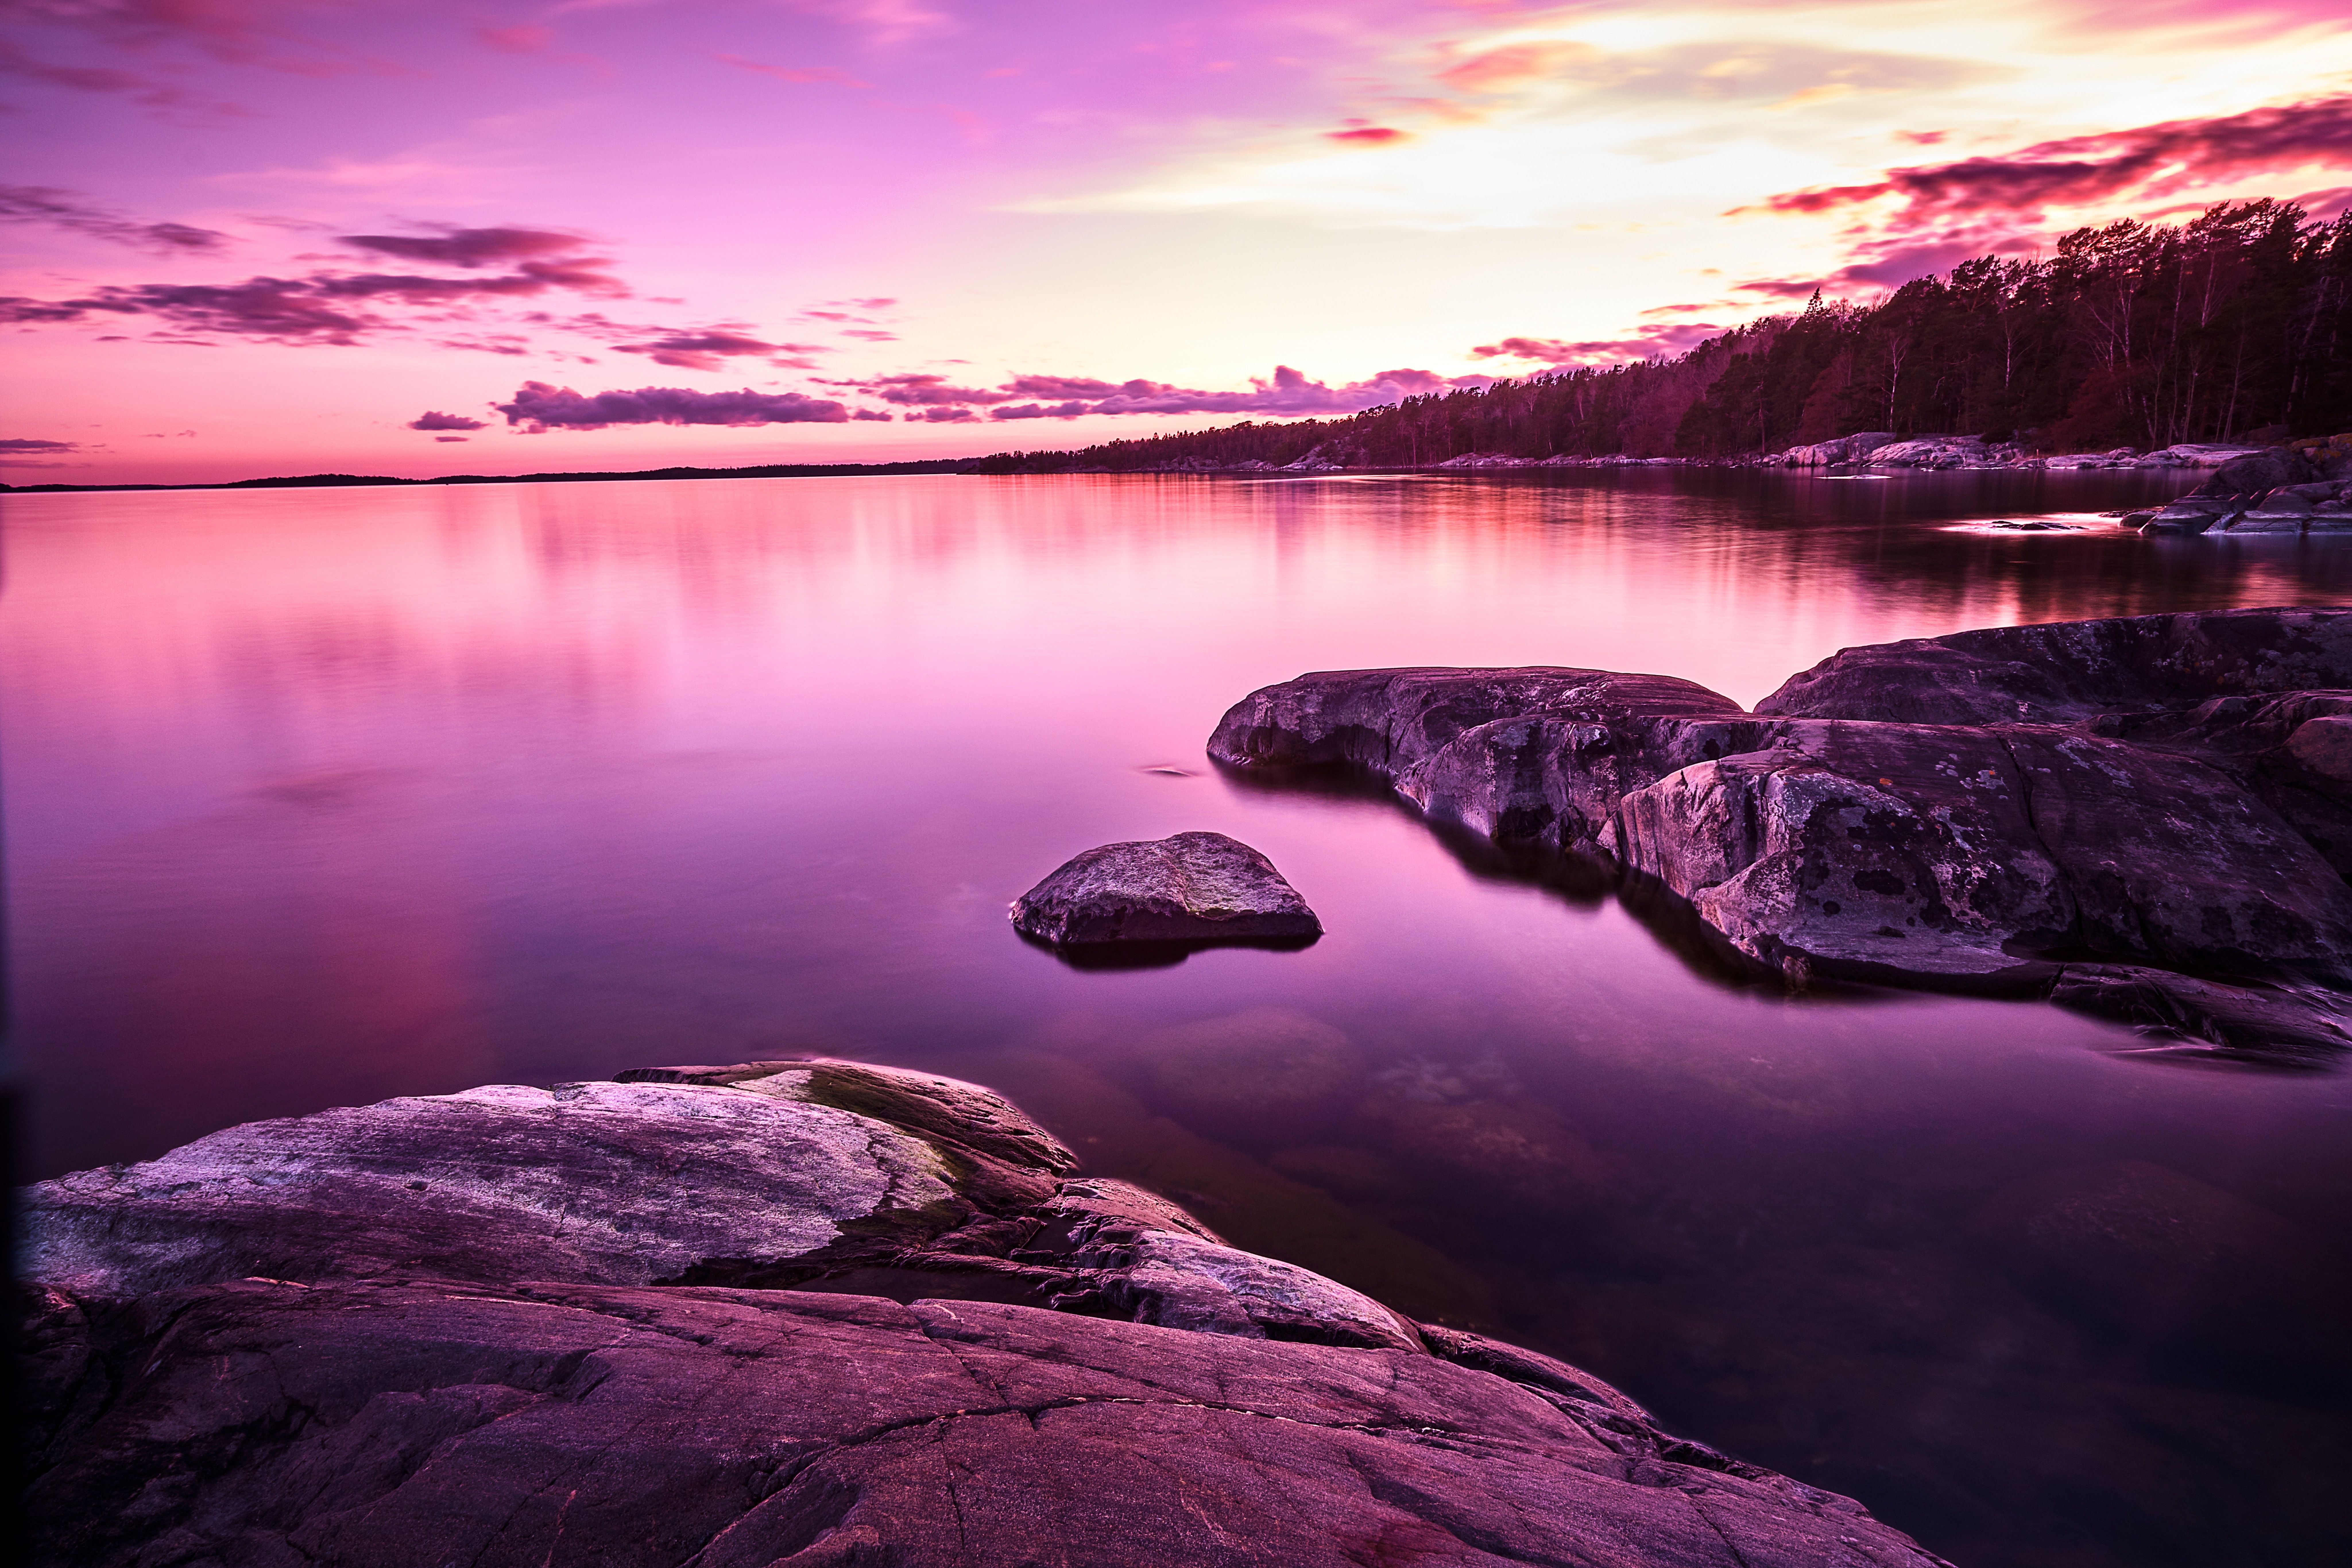 Sunset 4K Wallpaper, Lake, Purple, Pink sky, Scenery, 8K, Nature